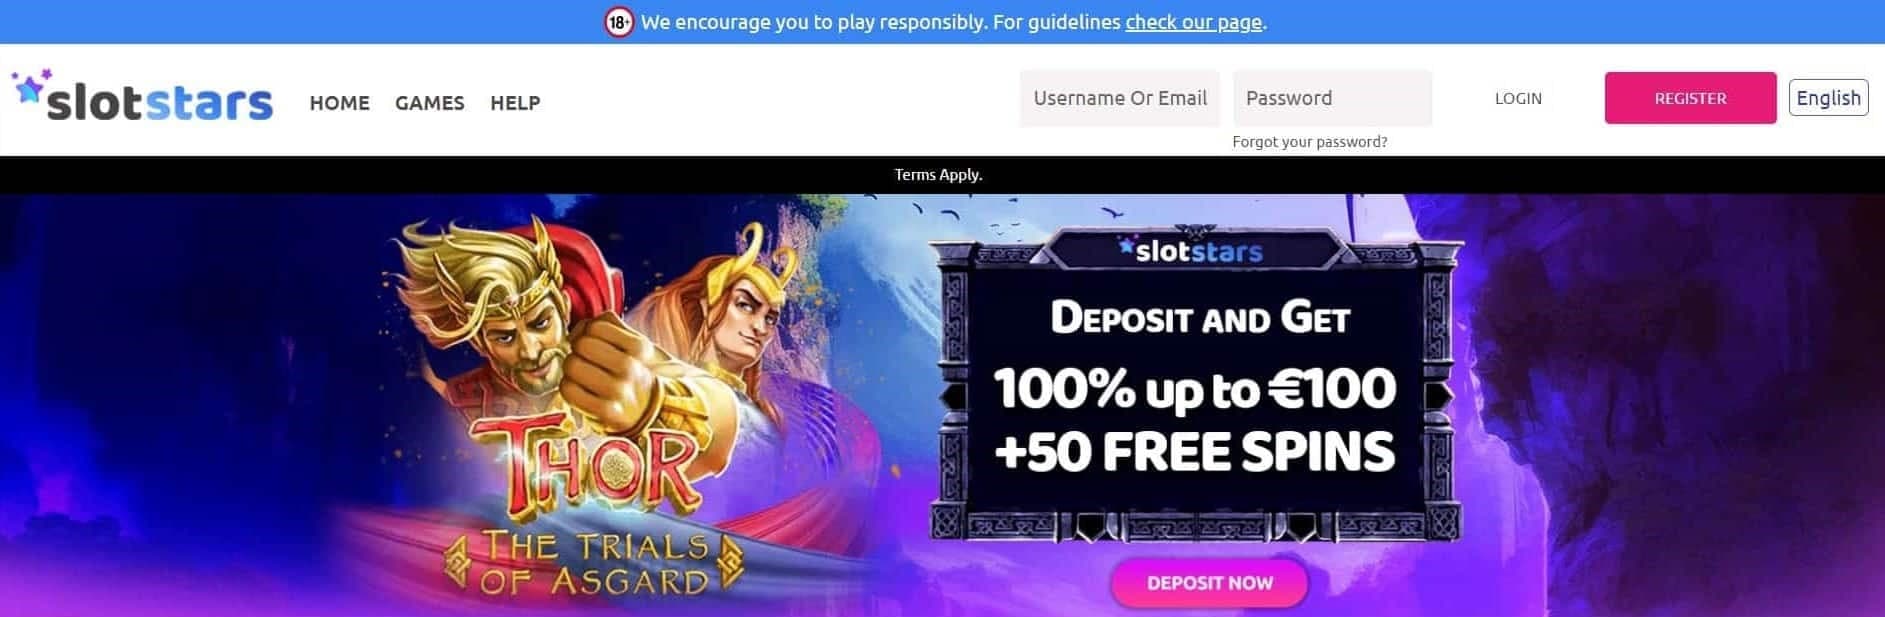 slot stars casino main page